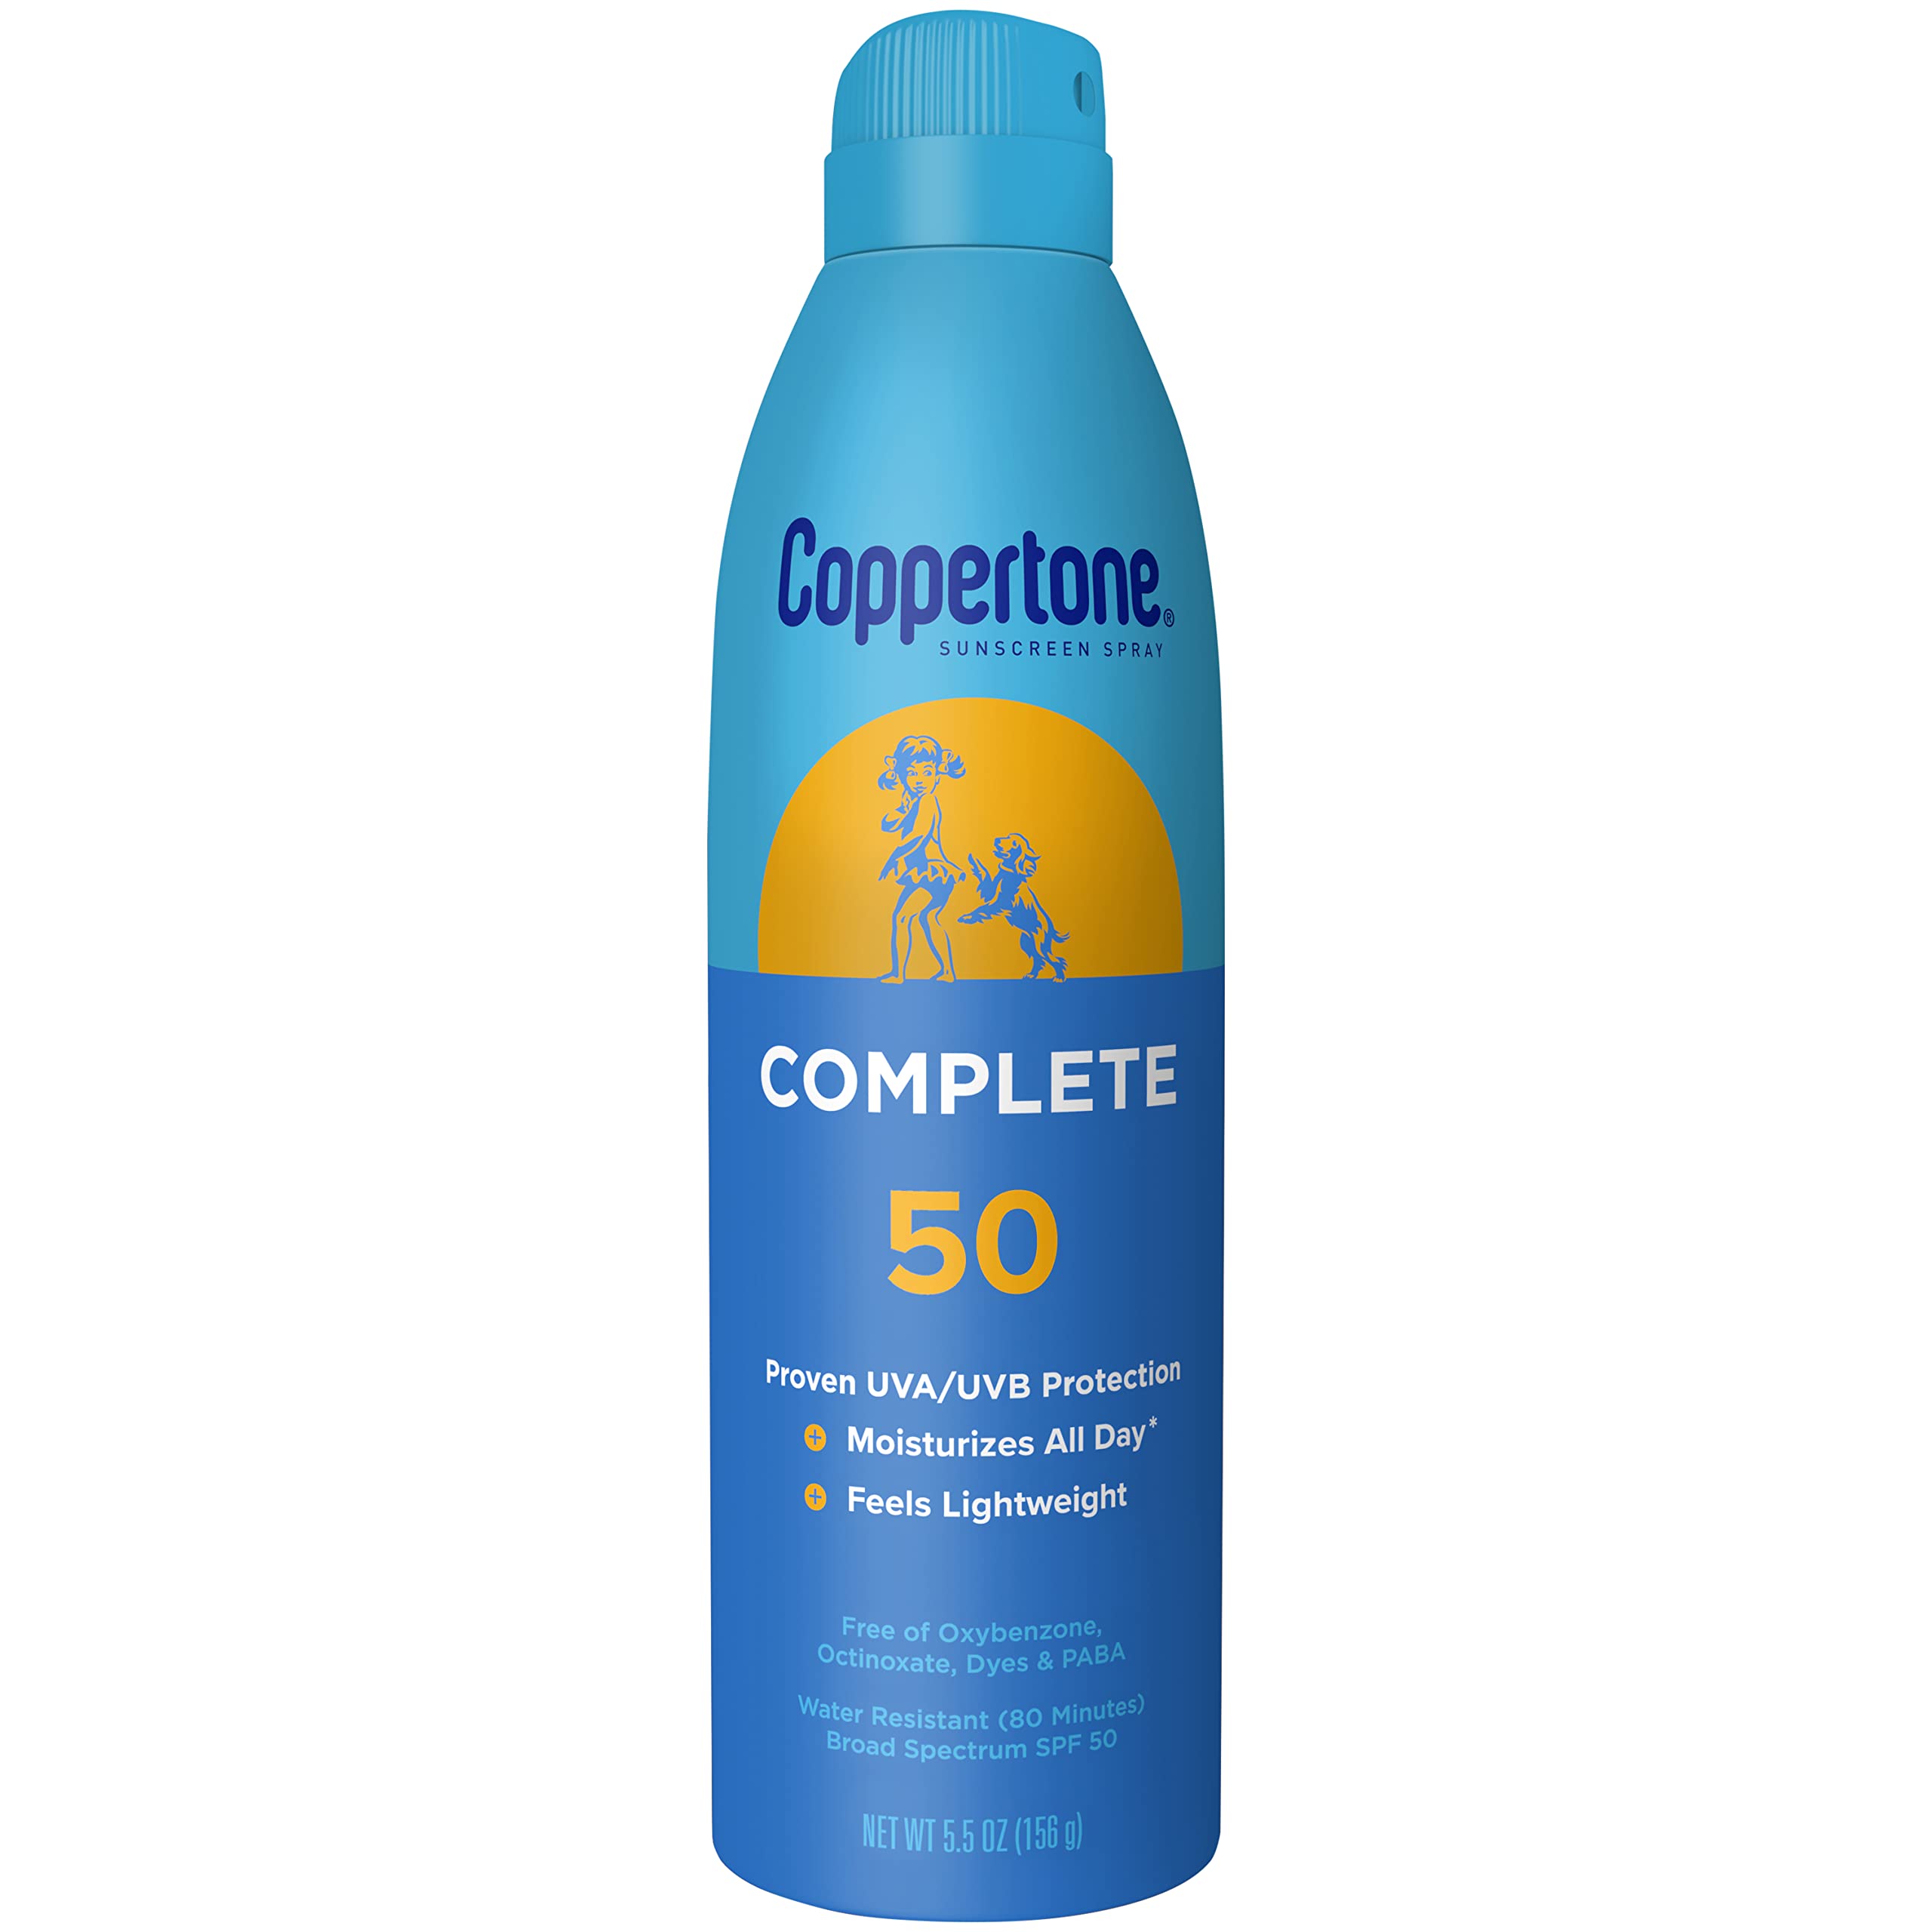 Coppertone COMPLETE SPF 50 Sunscreen Spray, Lightweight, Moisturizing Sunscreen, Water Resistant Spray Sunscreen SPF 50, 5.5 Oz Spray